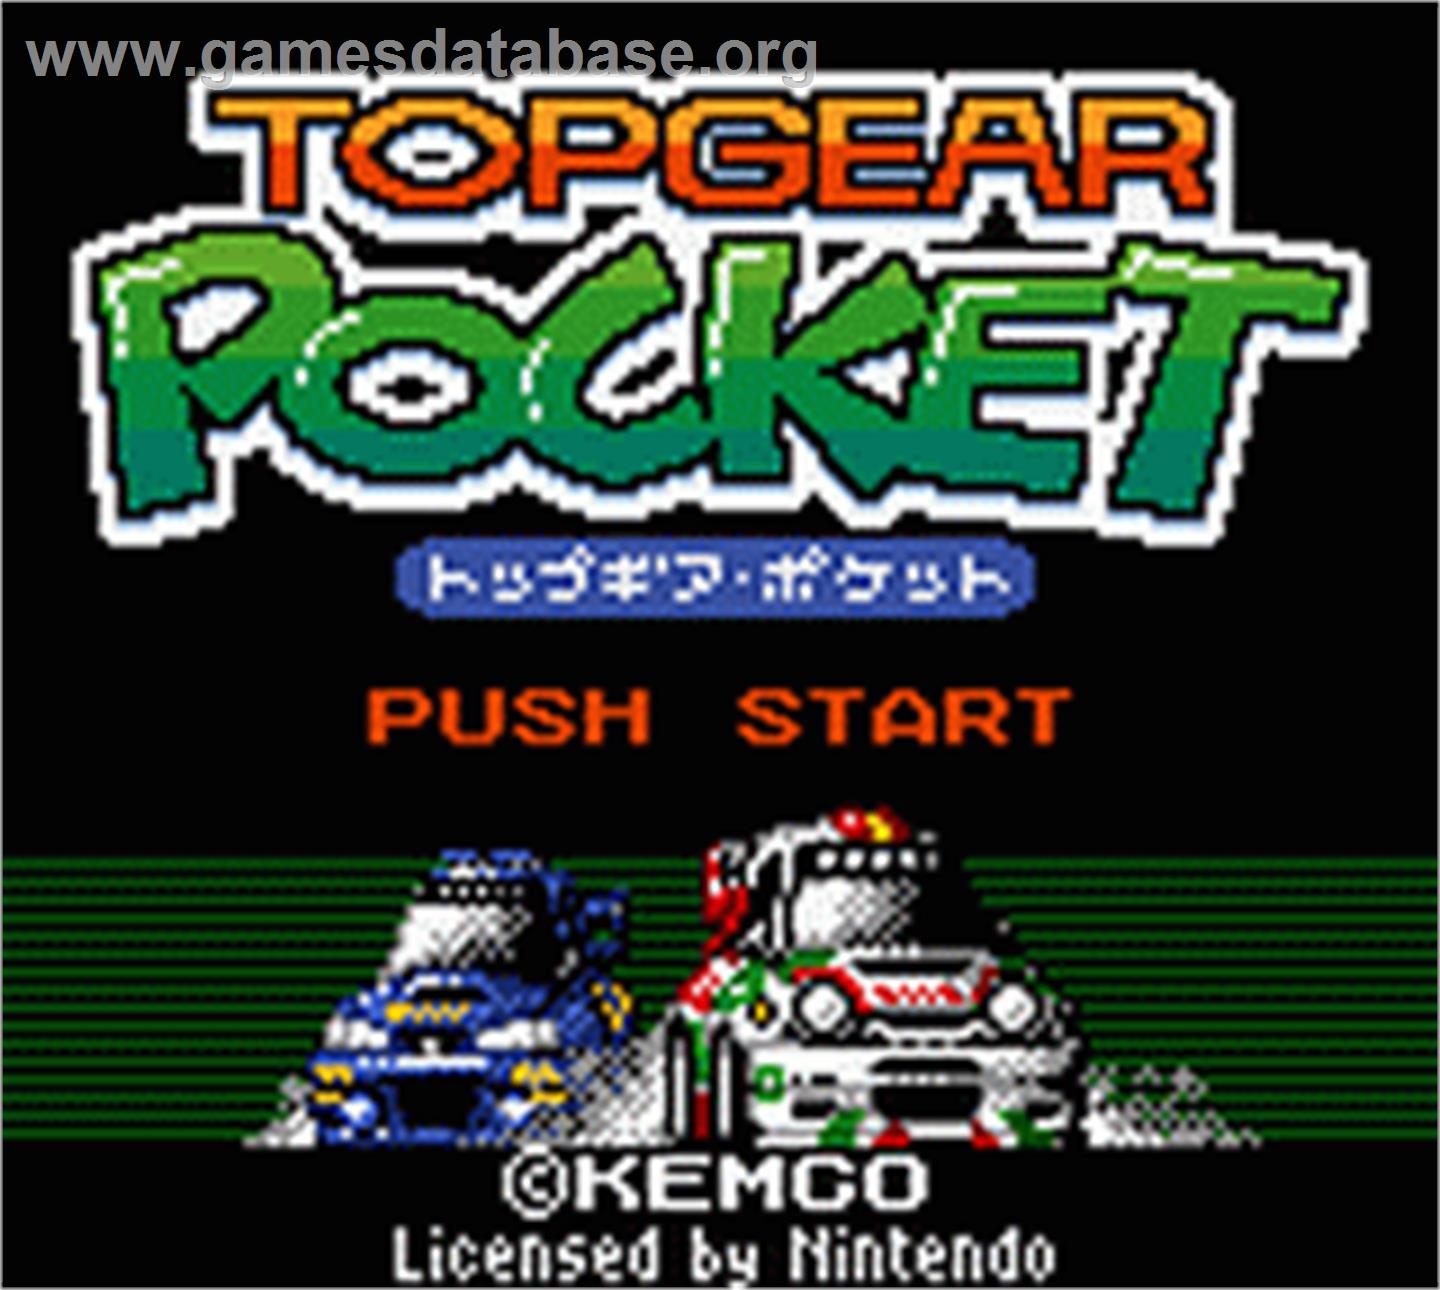 Top Gear Pocket - Nintendo Game Boy Color - Artwork - Title Screen